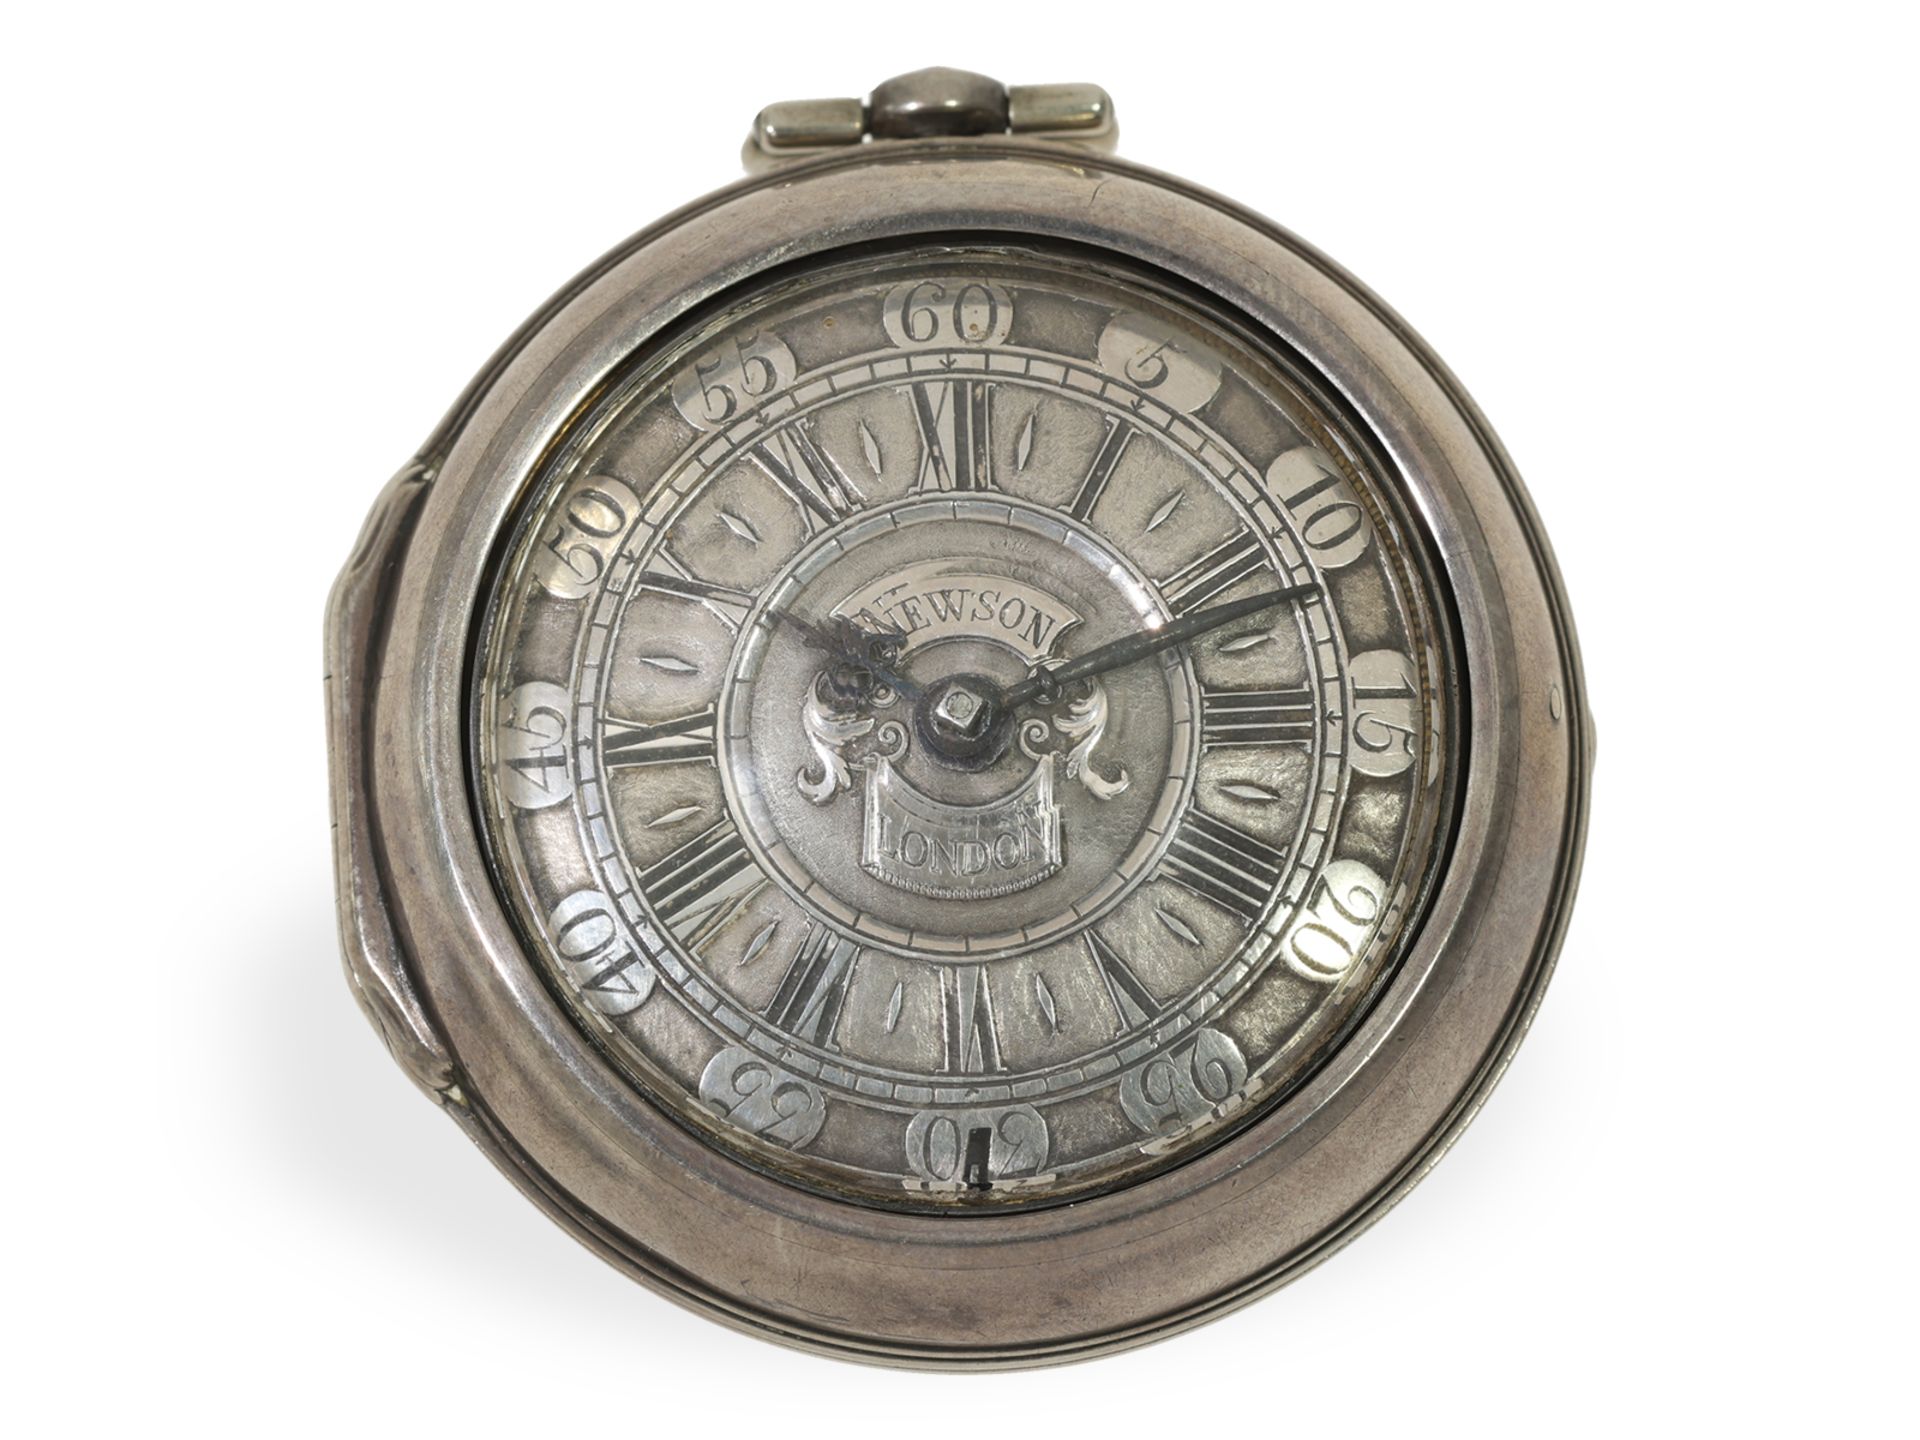 Pocket watch: very beautiful, early pair case verge watch from around 1740, John Newson London